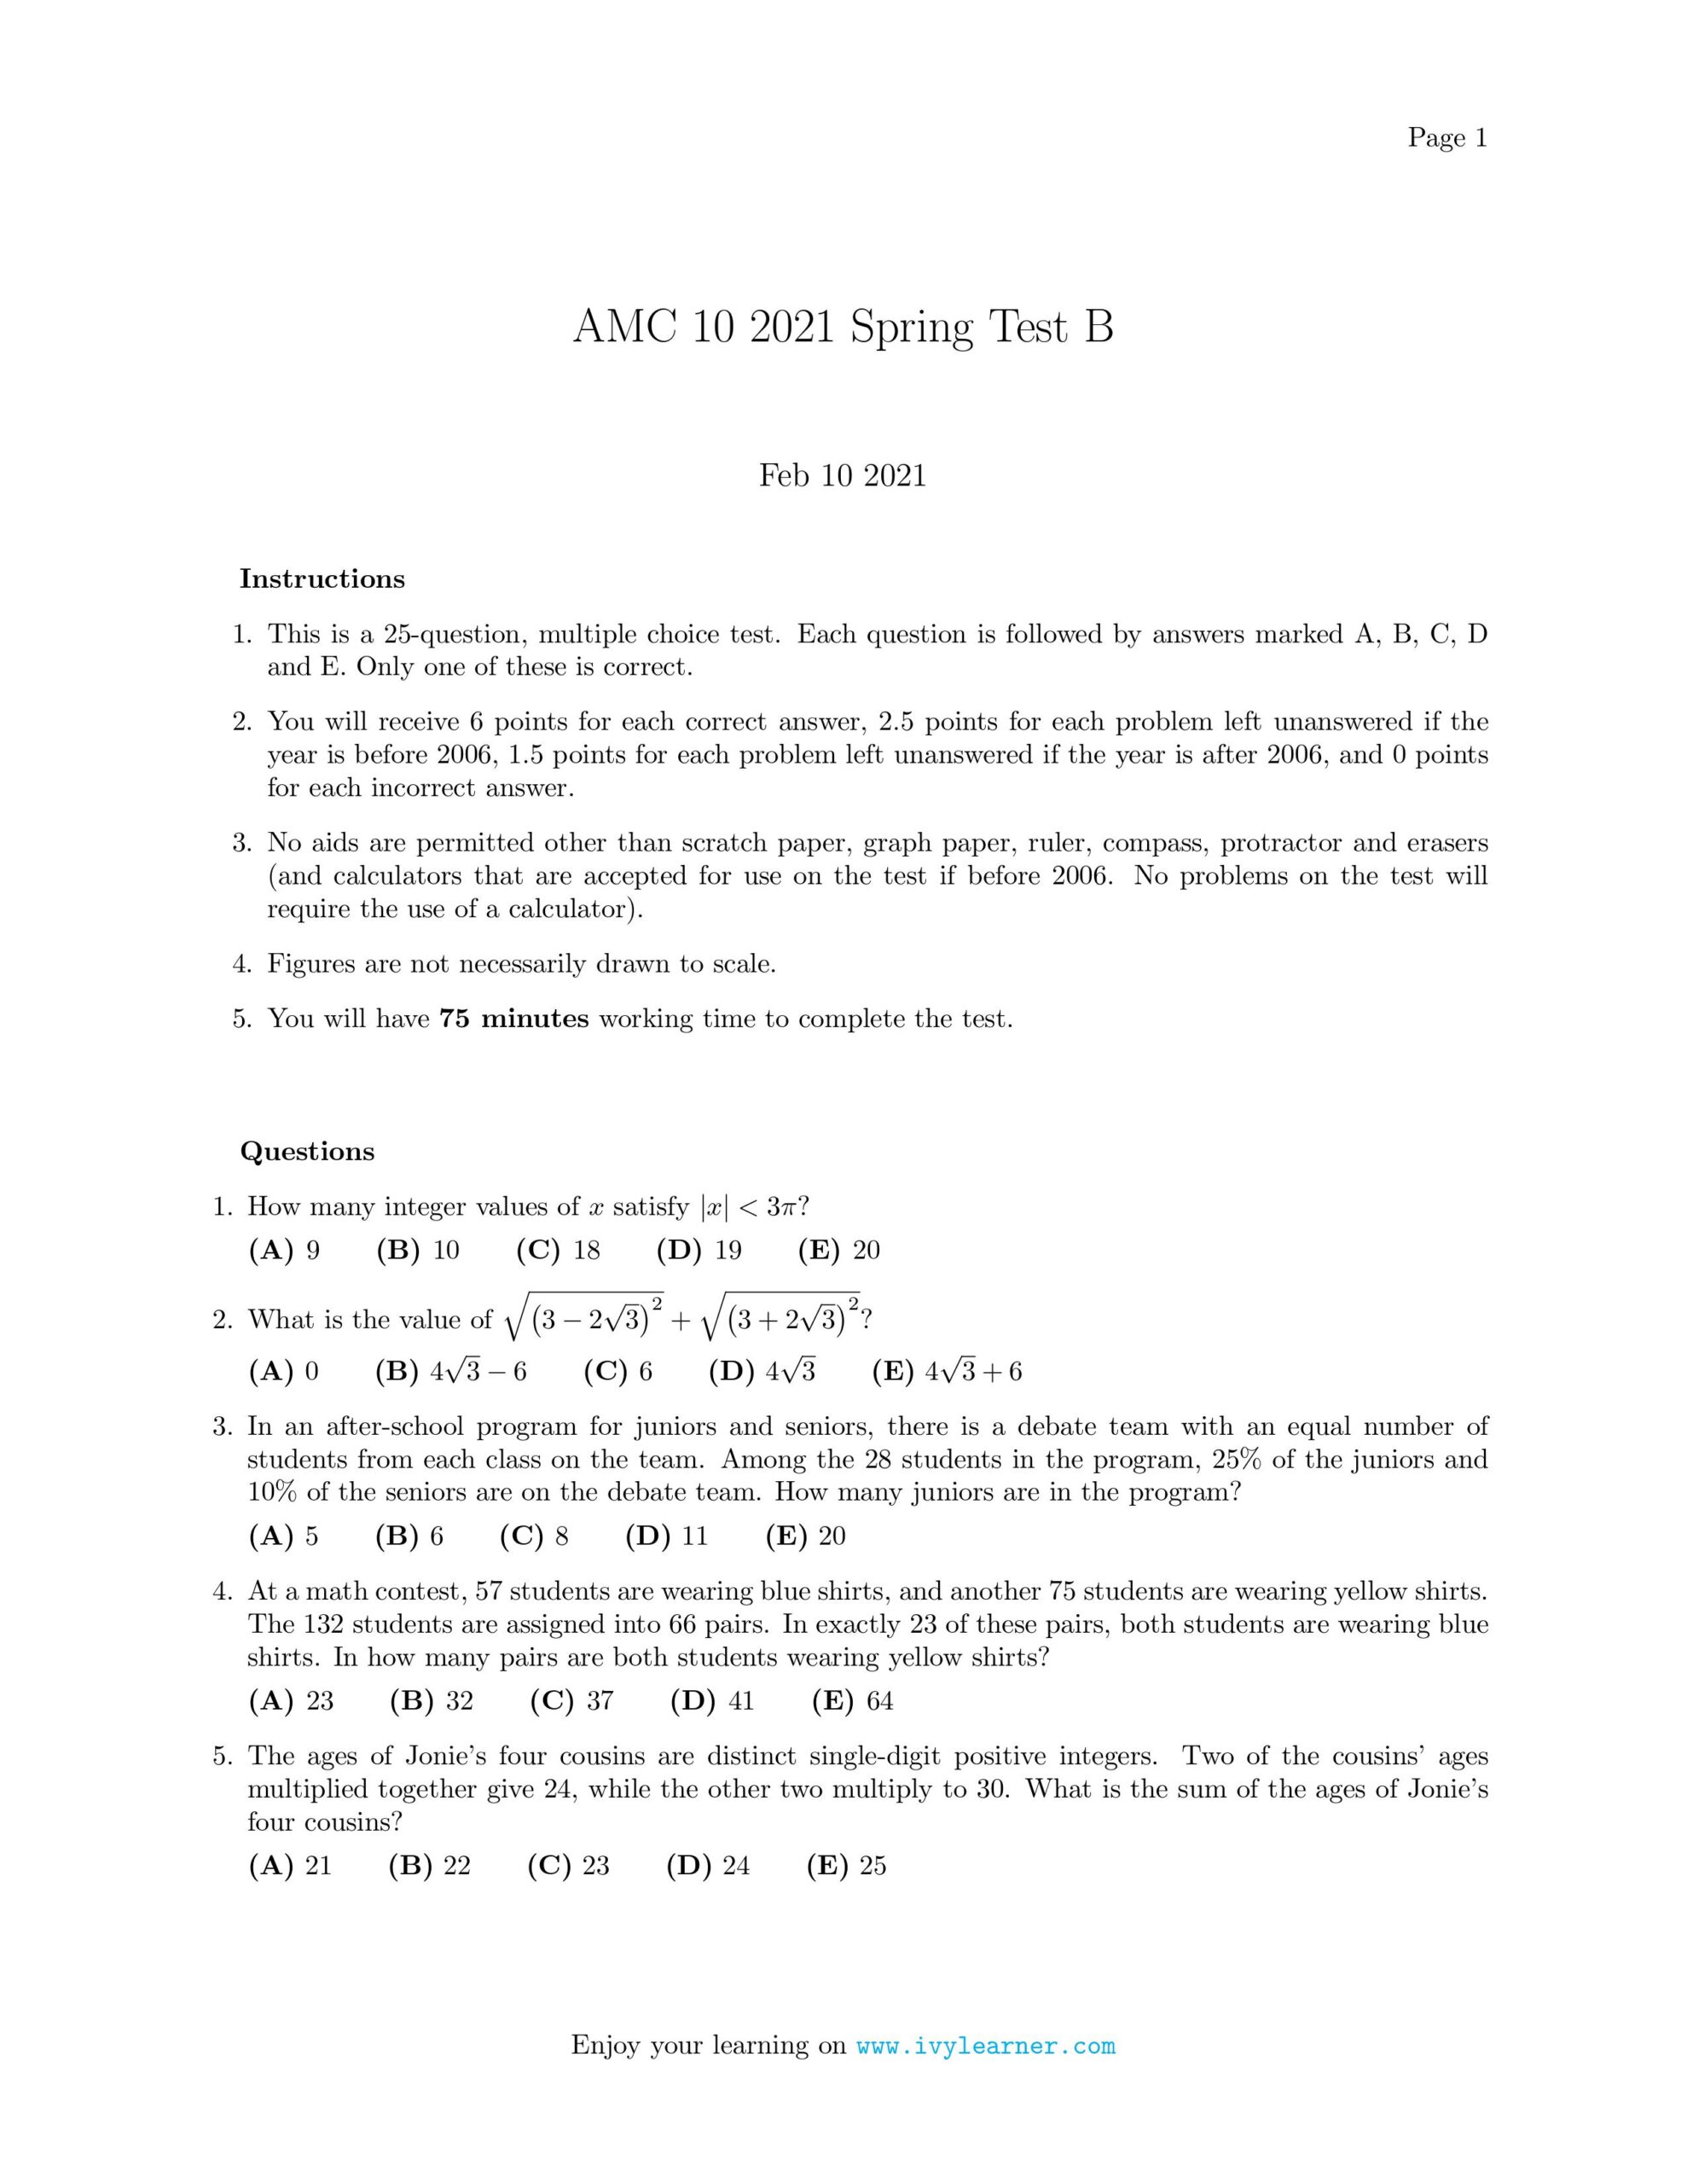 AMC 10 2021 Spring Test B Exam Ivy learner